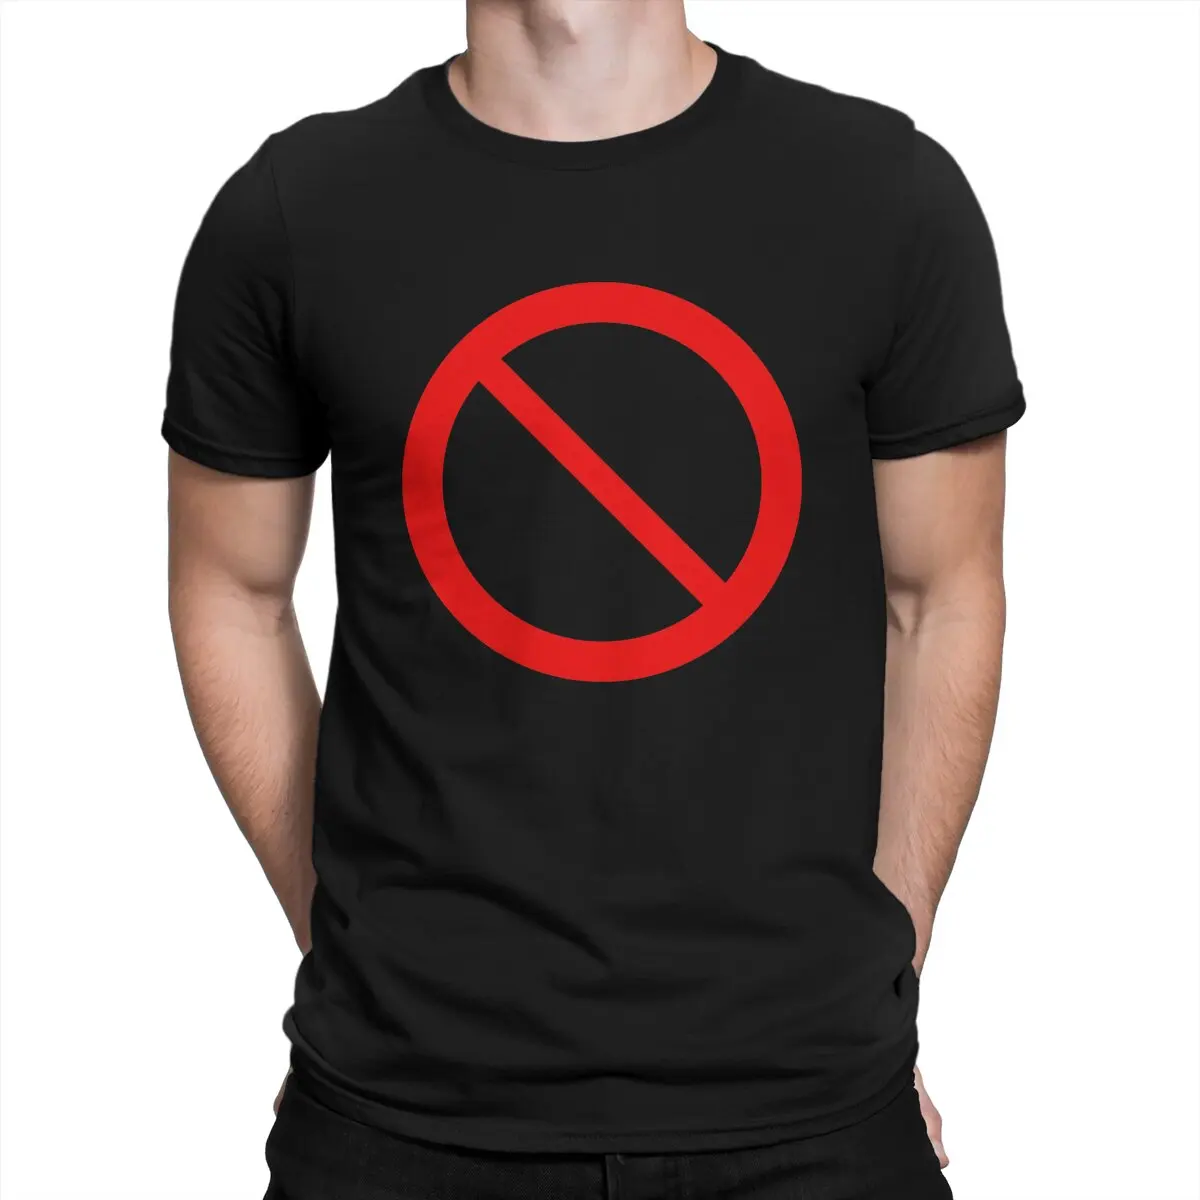 

Friday Night Funkin FNF Music Boy Newest TShirt for Men Boyfriend Prohibition Sign Classic Round Neck Pure Cotton T Shirt